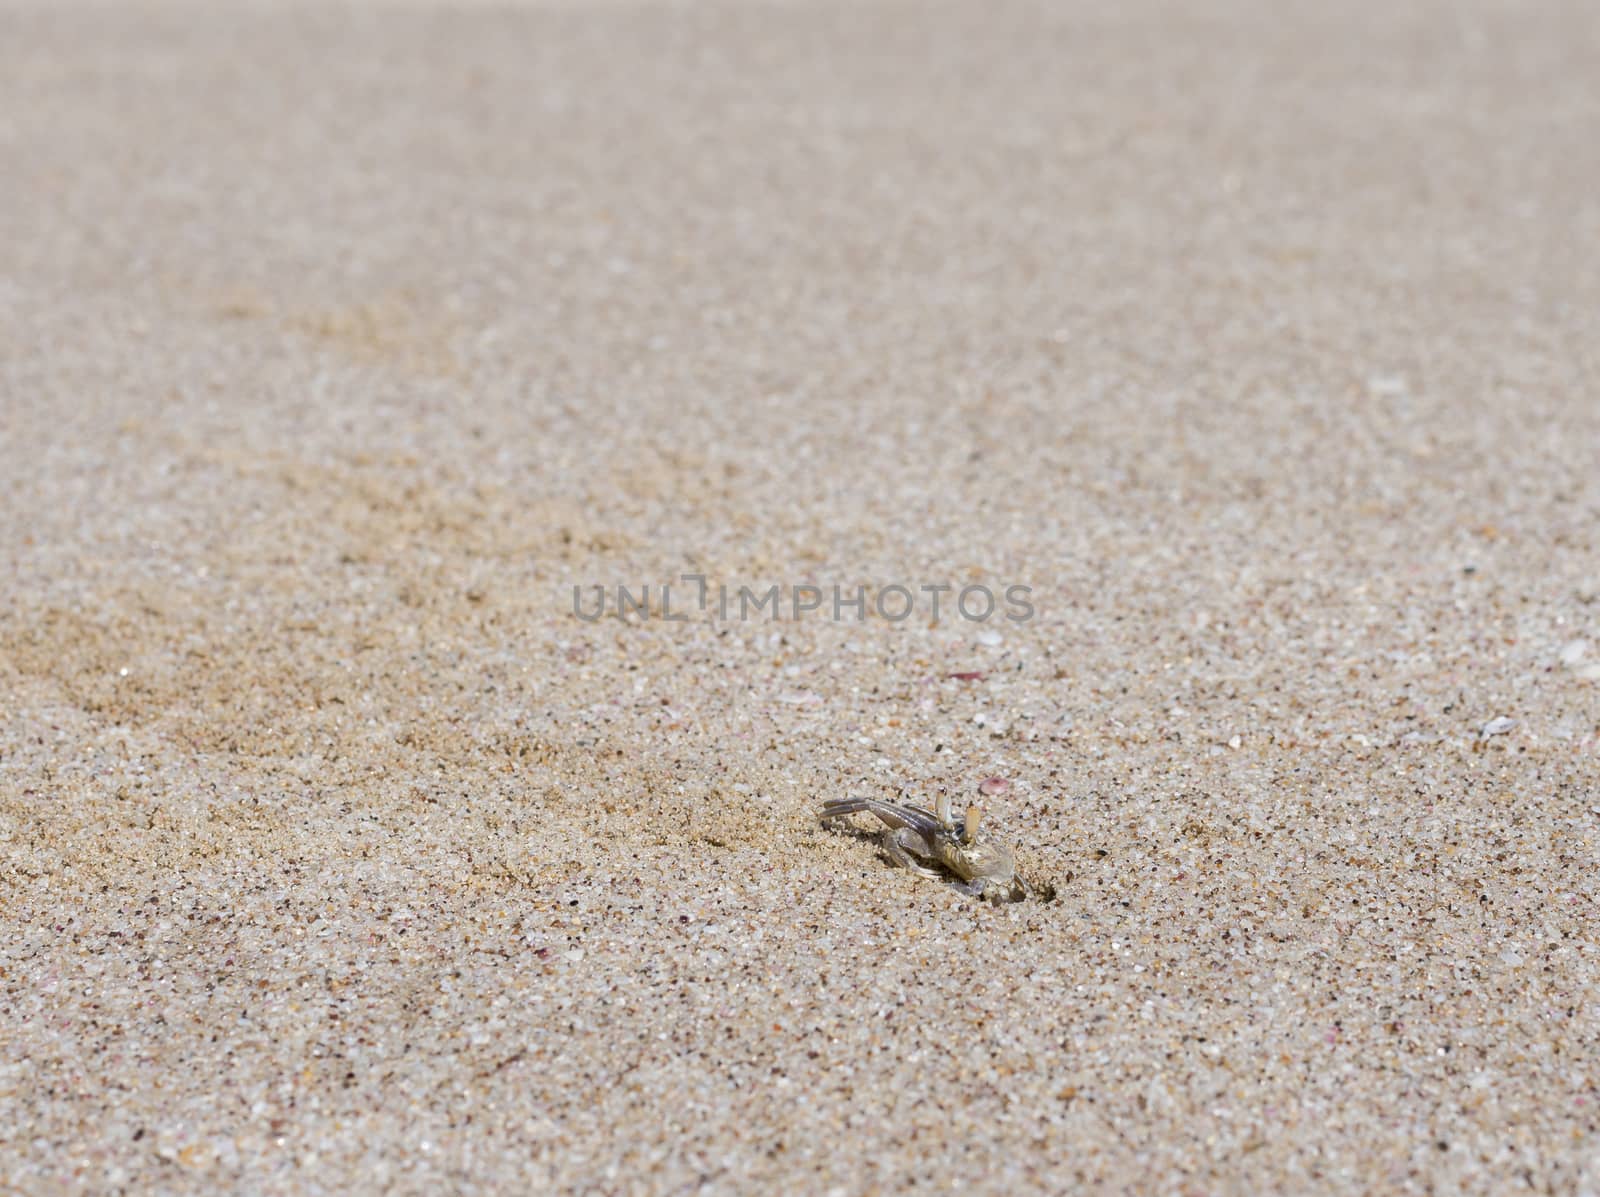 Ghost crab on a beach in Ras Al Jinz, Sultanate of Oman by GABIS